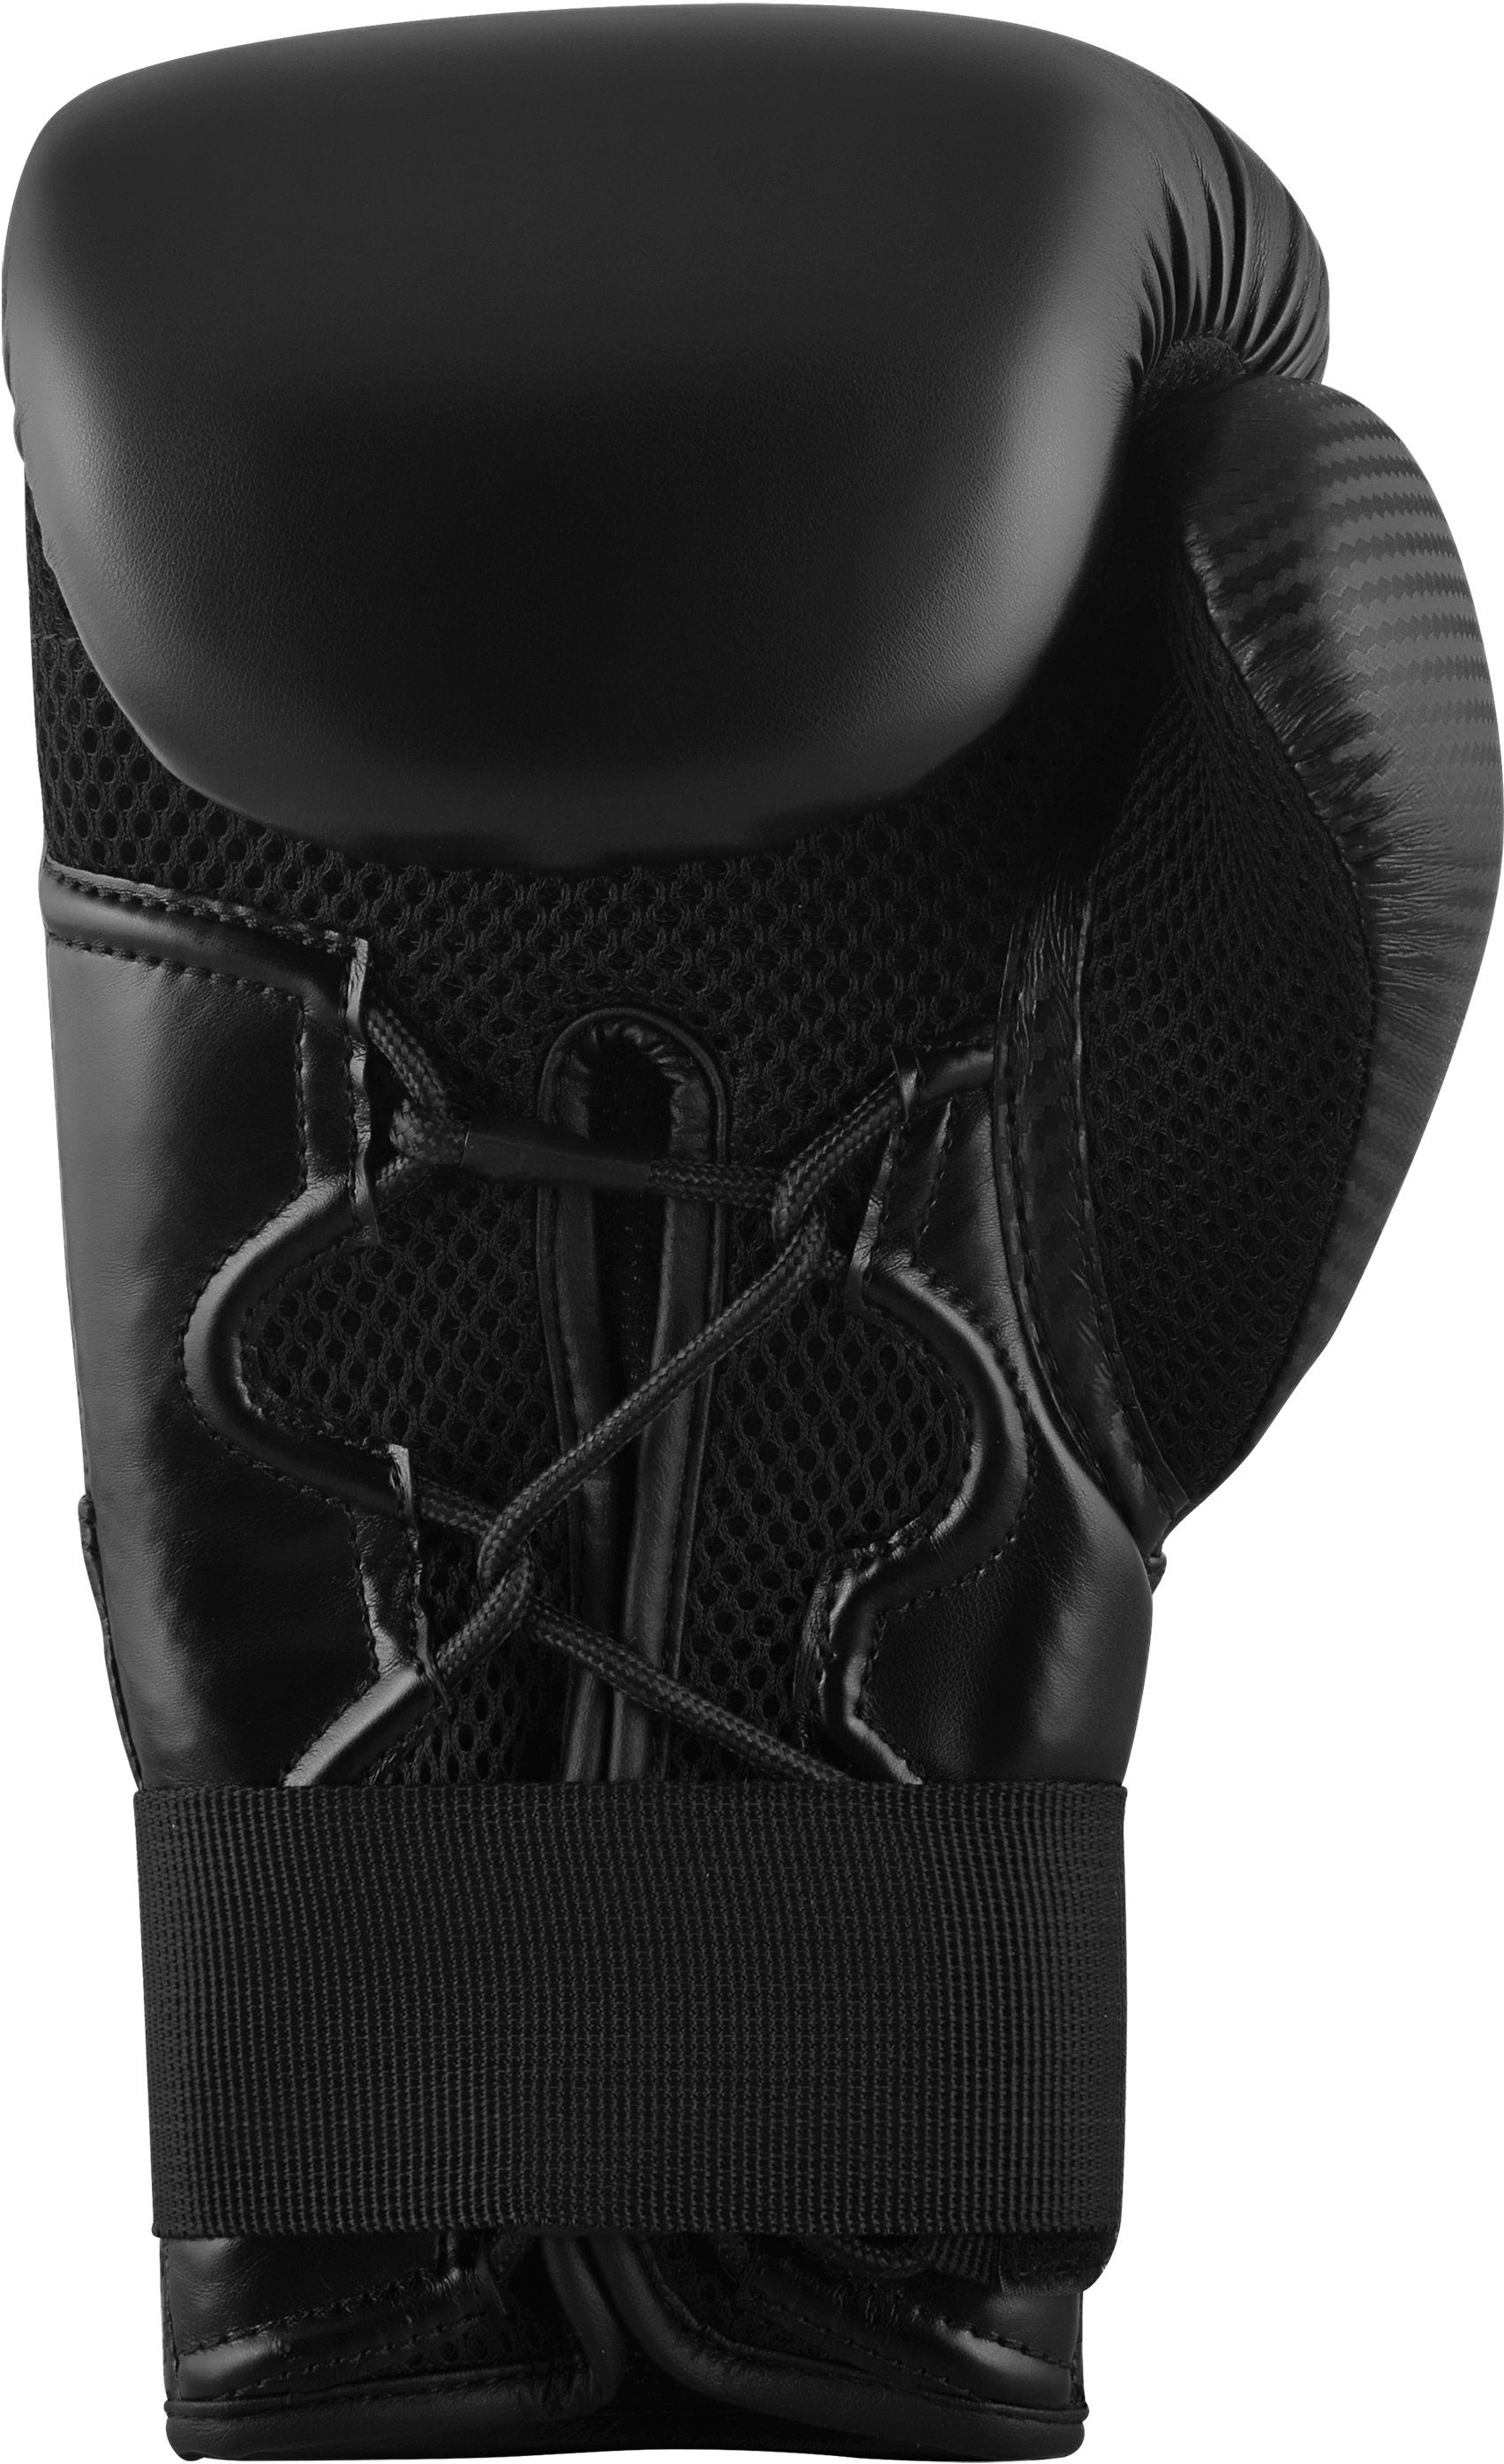 Boxhandschuhe adidas schwarz Performance